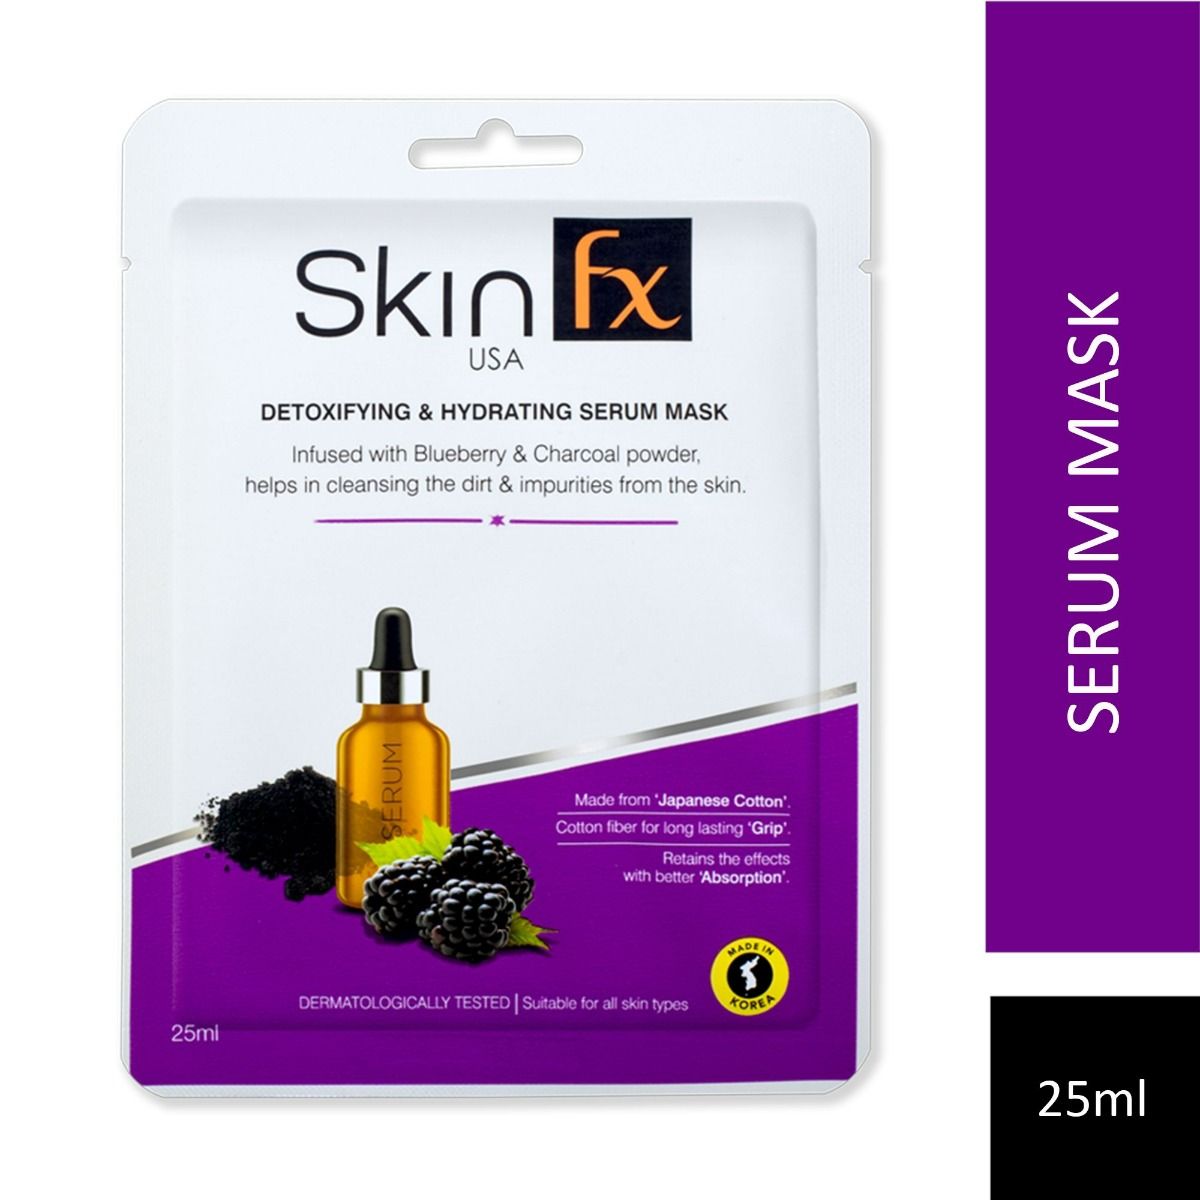 Skin Fx Detoxifying & Hydrating Serum Mask, 25 ml, Pack of 1 